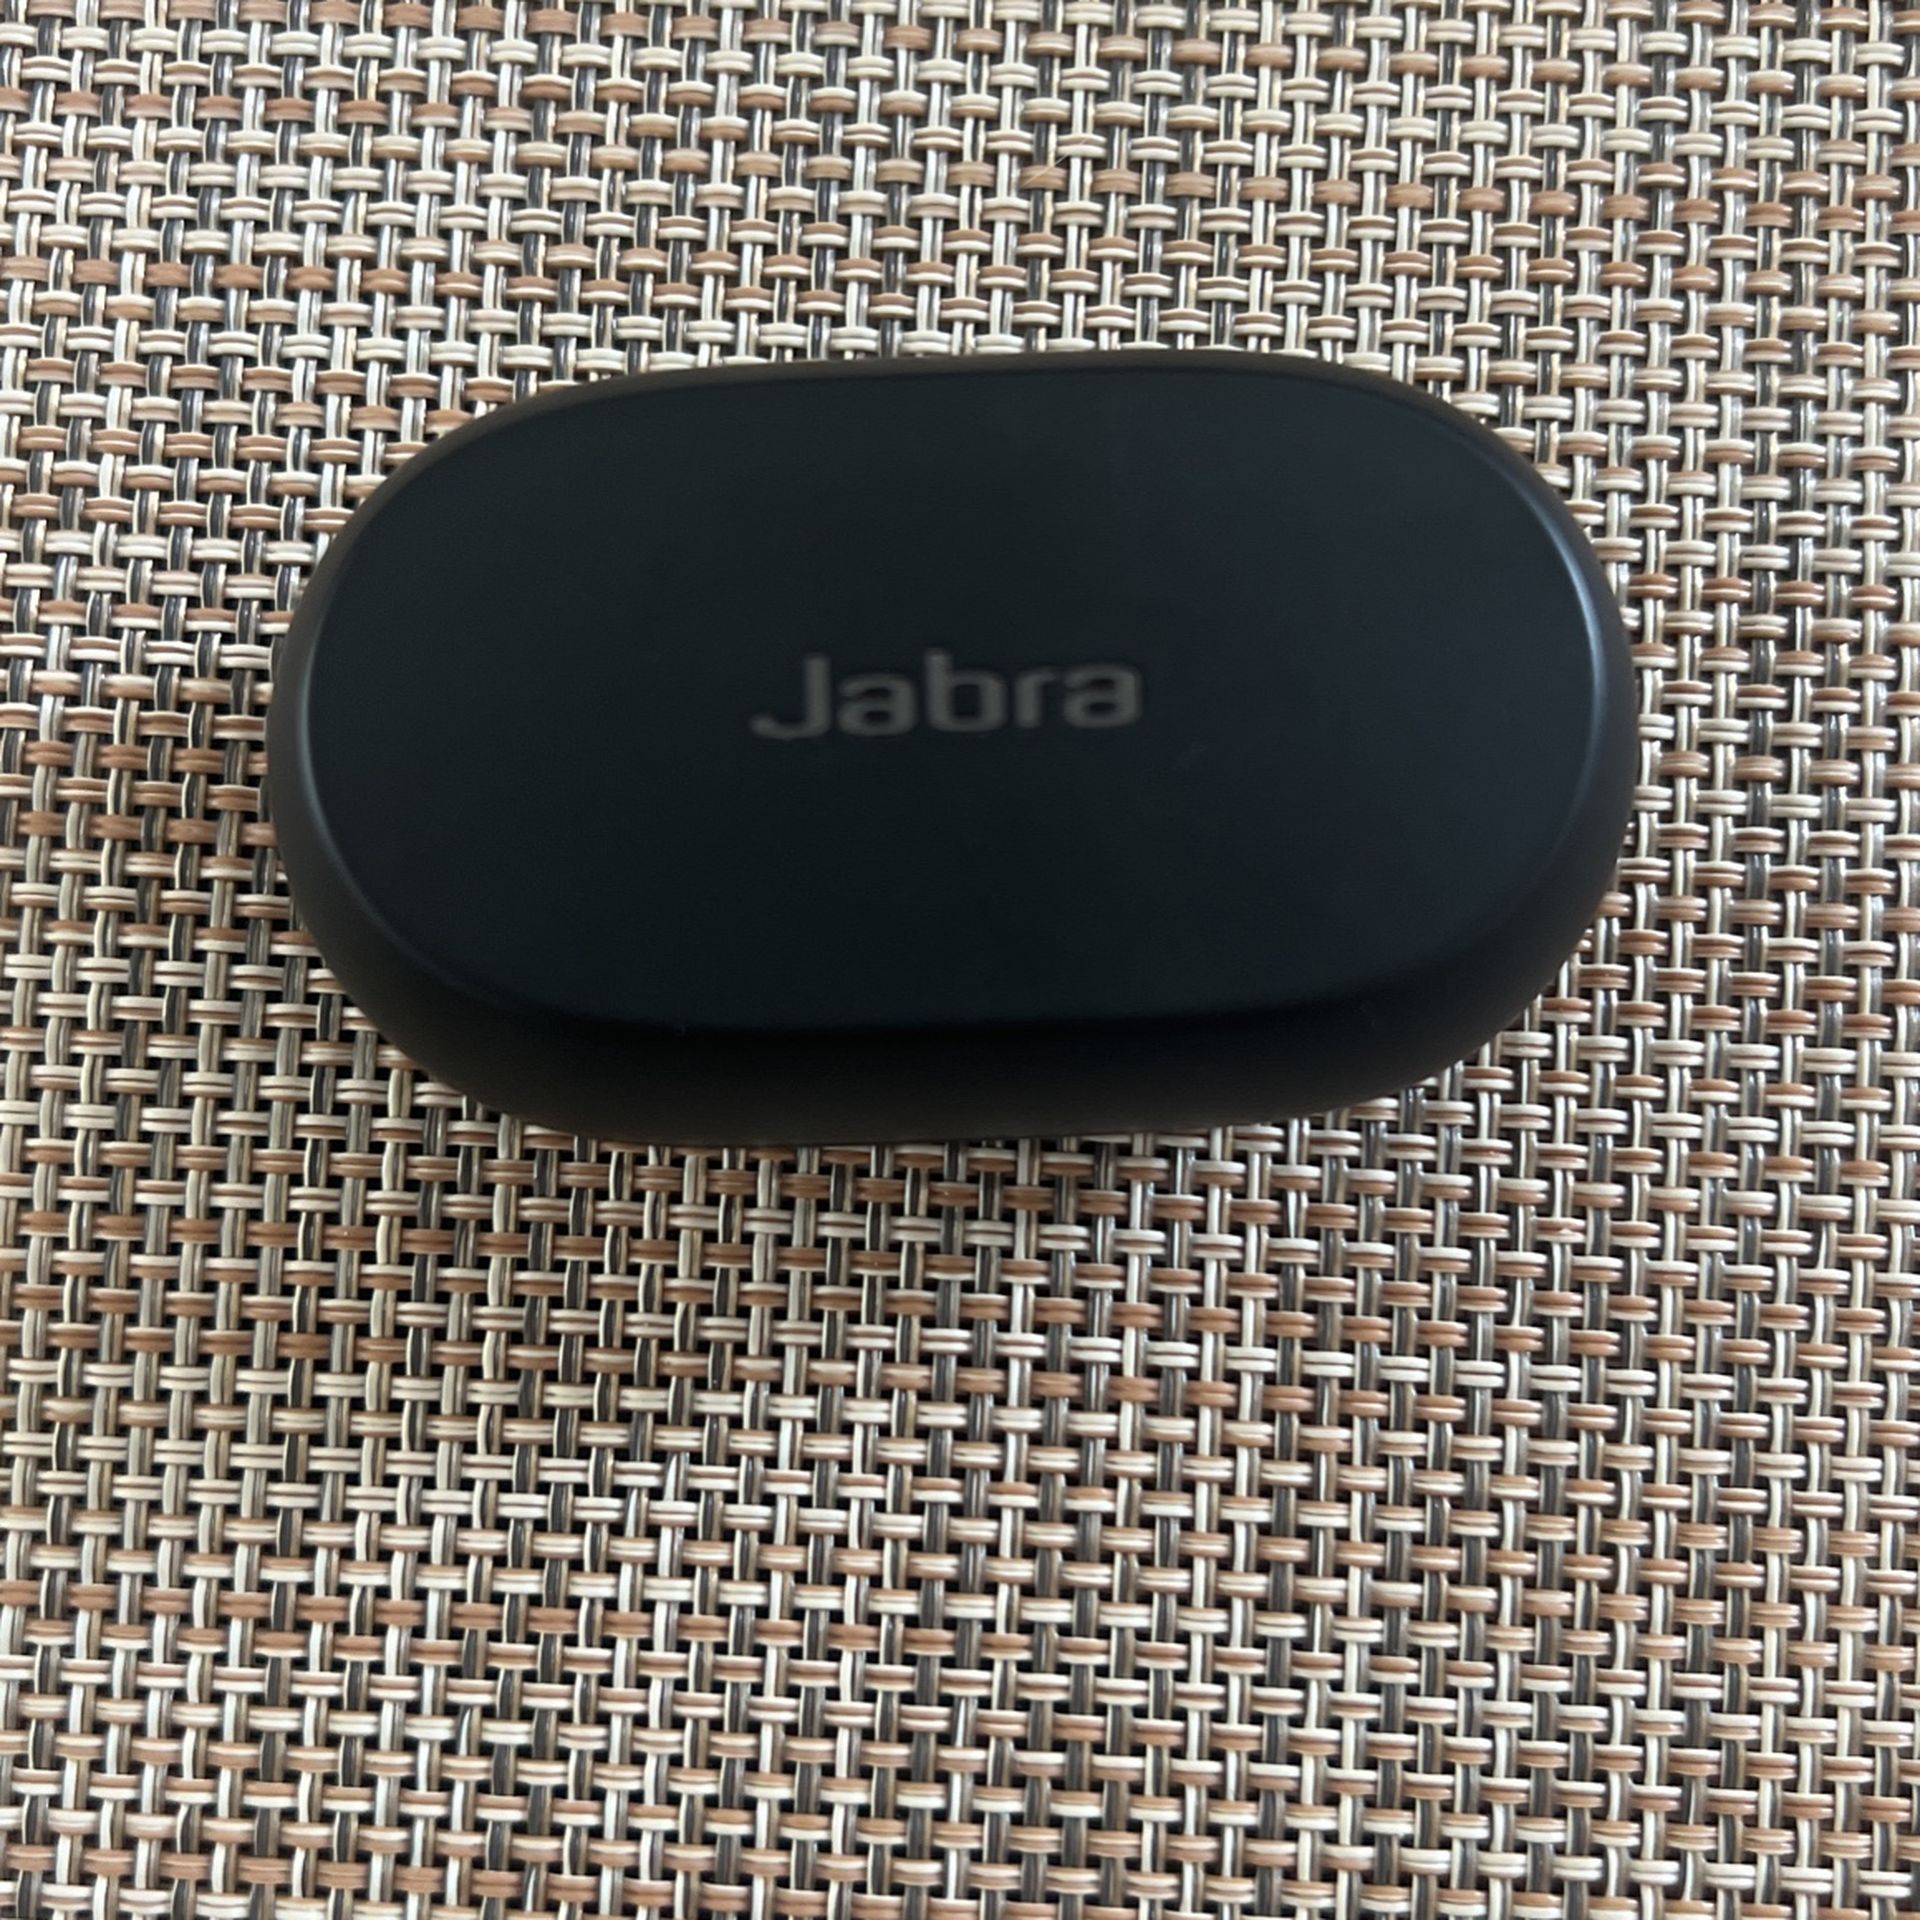 Jabra Elite 7 Pro Wireless Earbuds